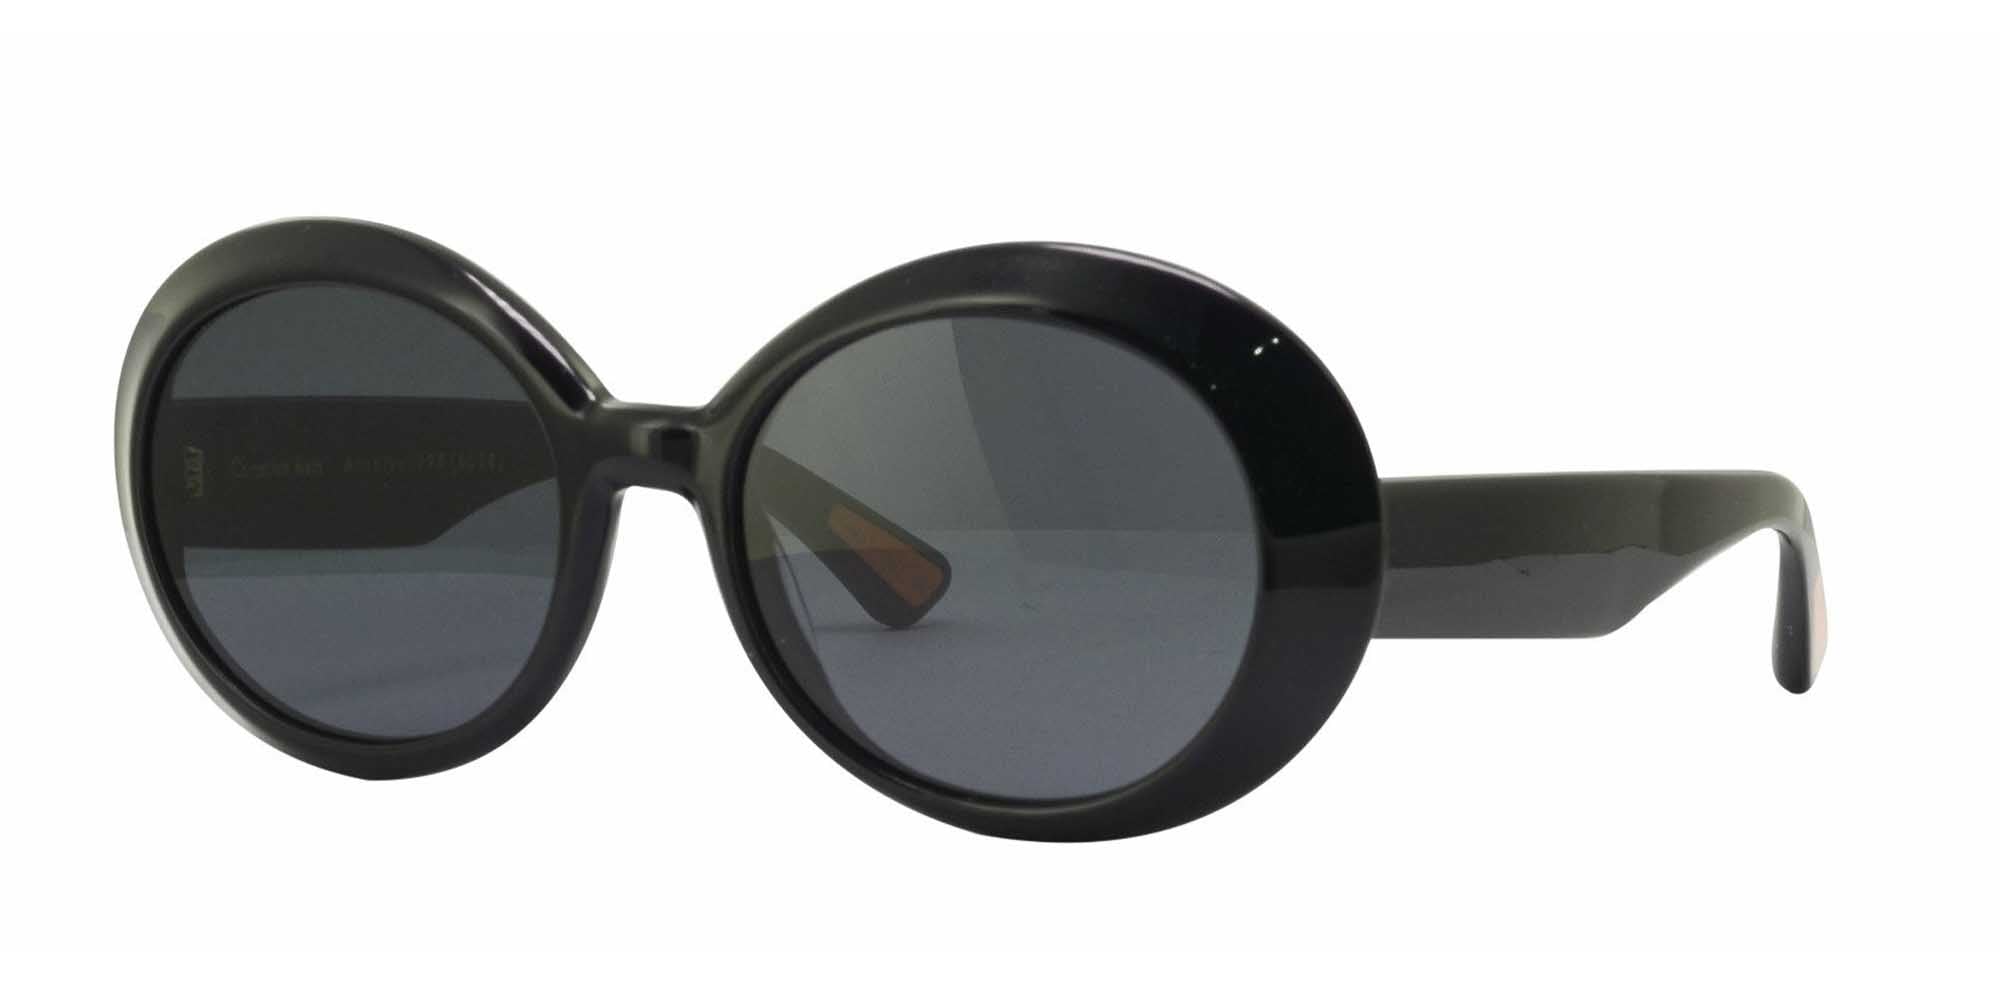 Christian Roth Archive 1993(6558) Sunglasses | Fashion Eyewear US